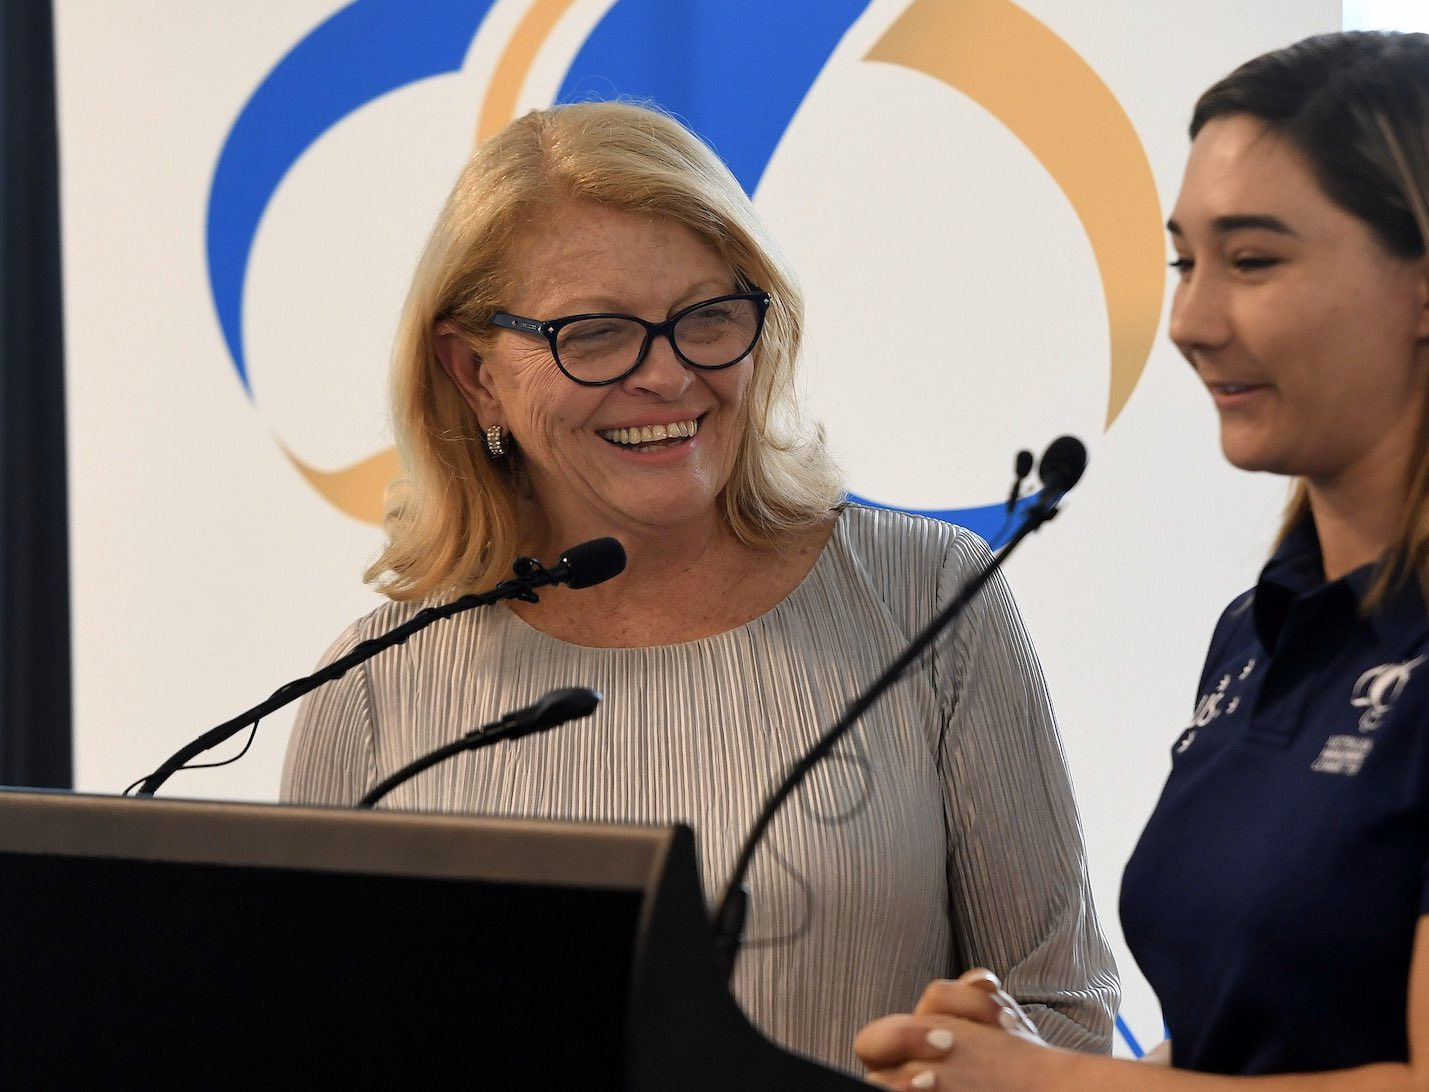 Paralympics Australia honoured by IPC on International Women’s Day